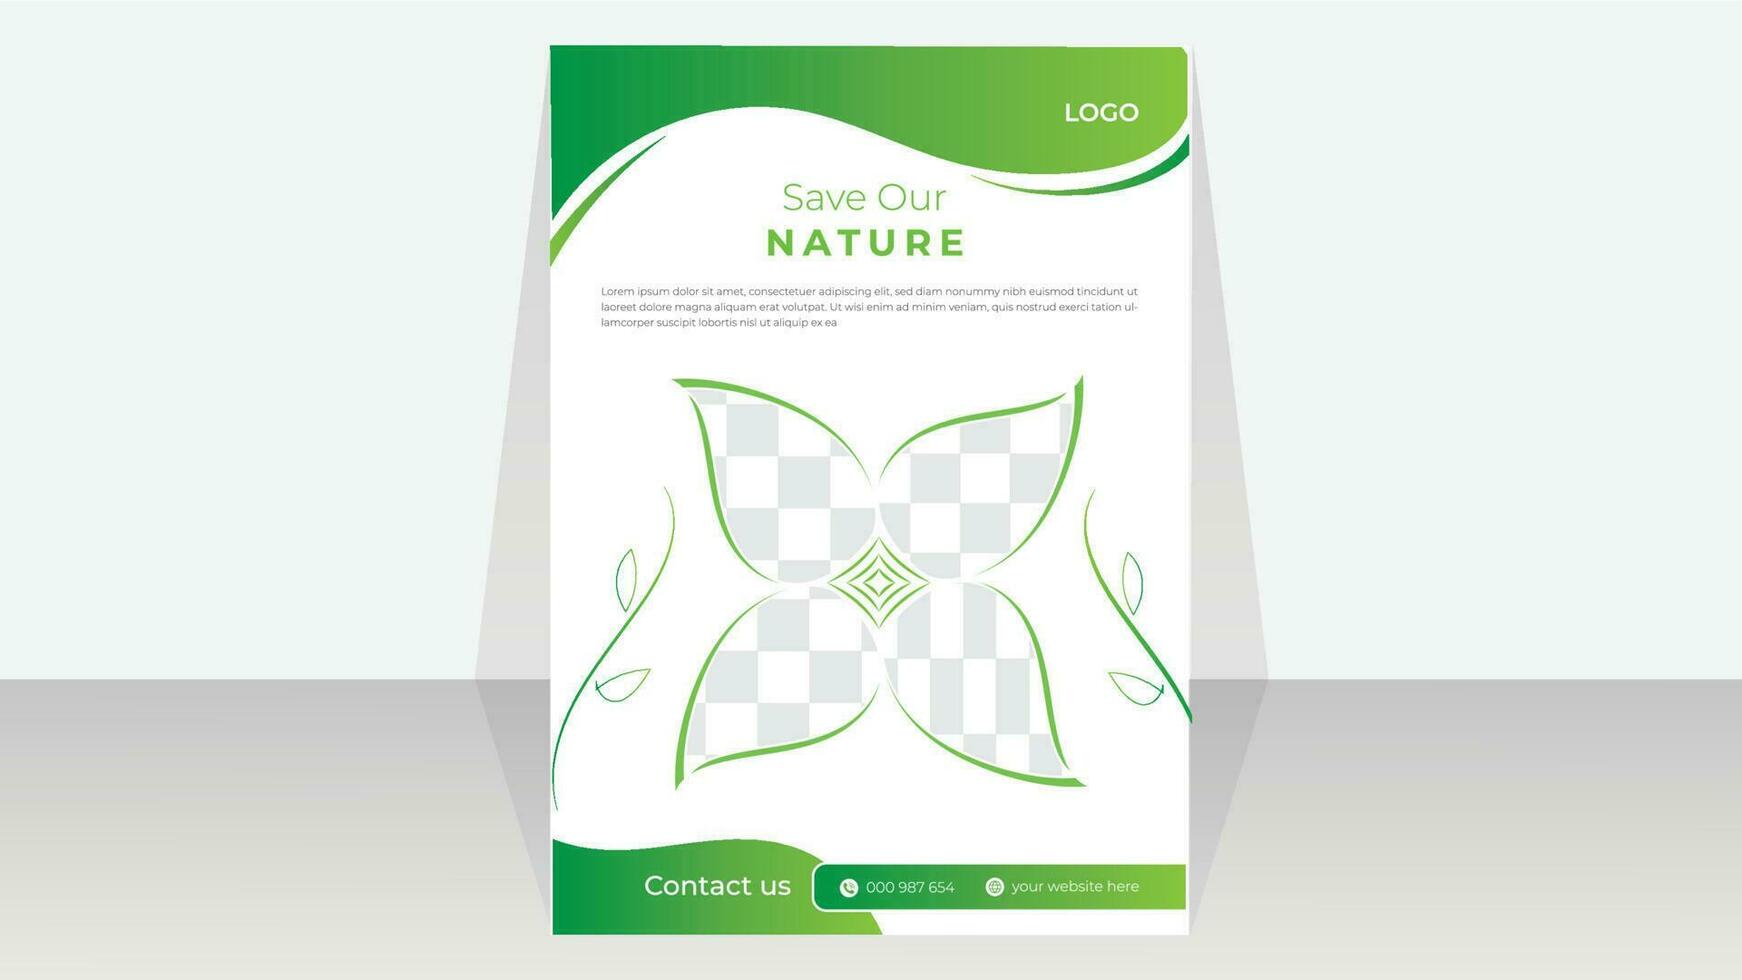 moderno sencillo resumen eco volantes a4 vector modelo para imprimir, folleto, revista cubrir modelo. póster, verde hoja, ambiente .